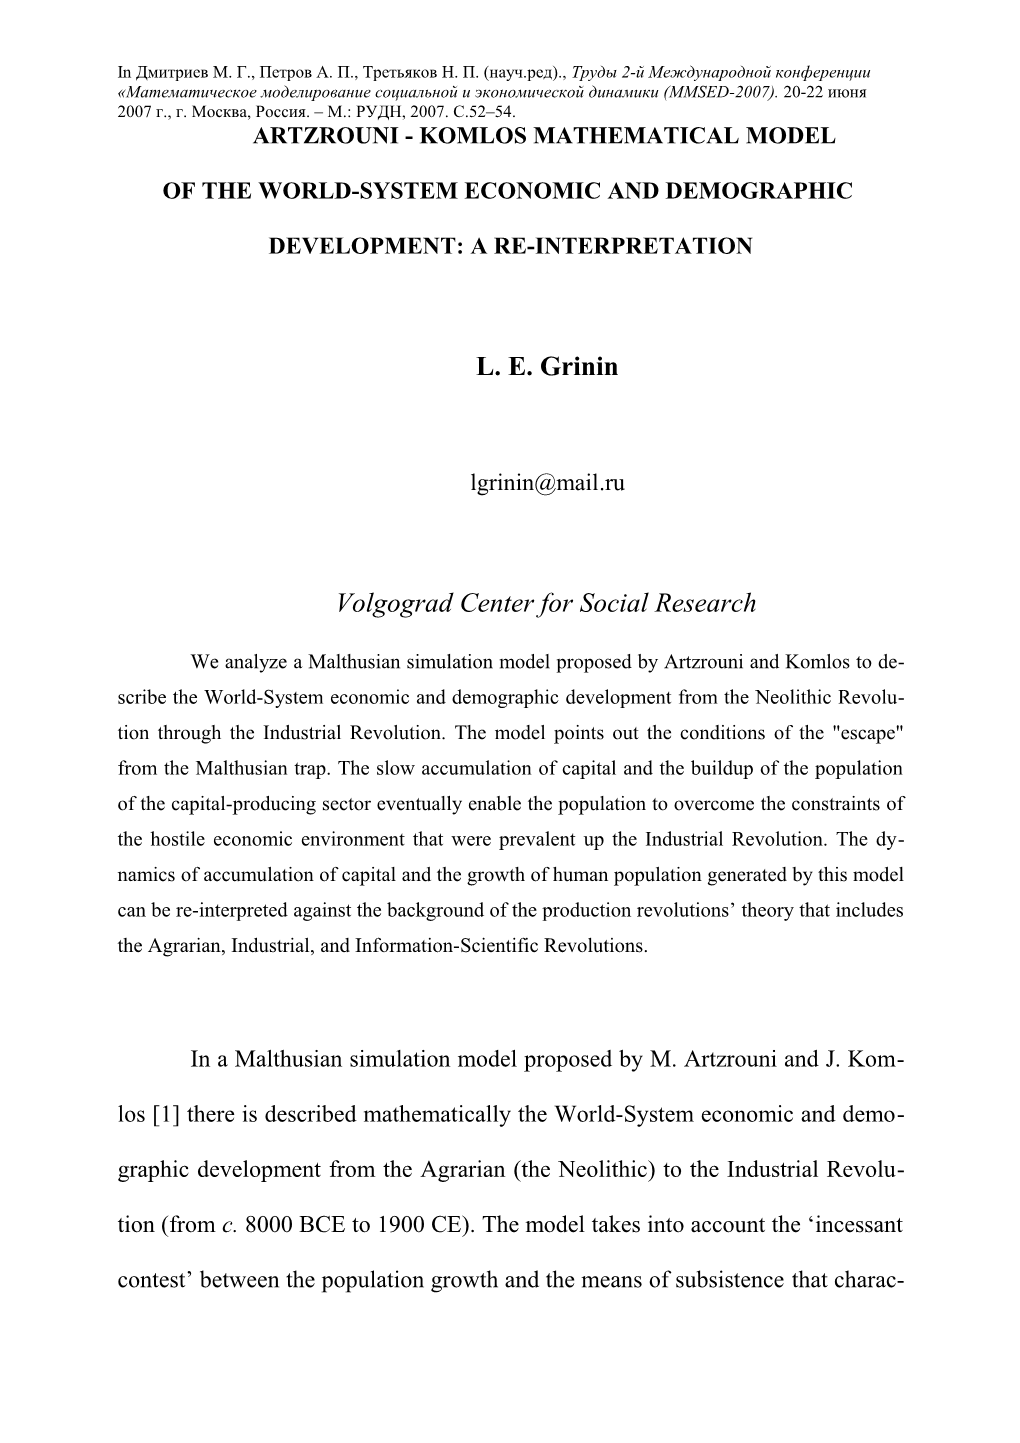 Artzrouni - Komlos Mathematical Model of the World-System Economic and Demographic Development